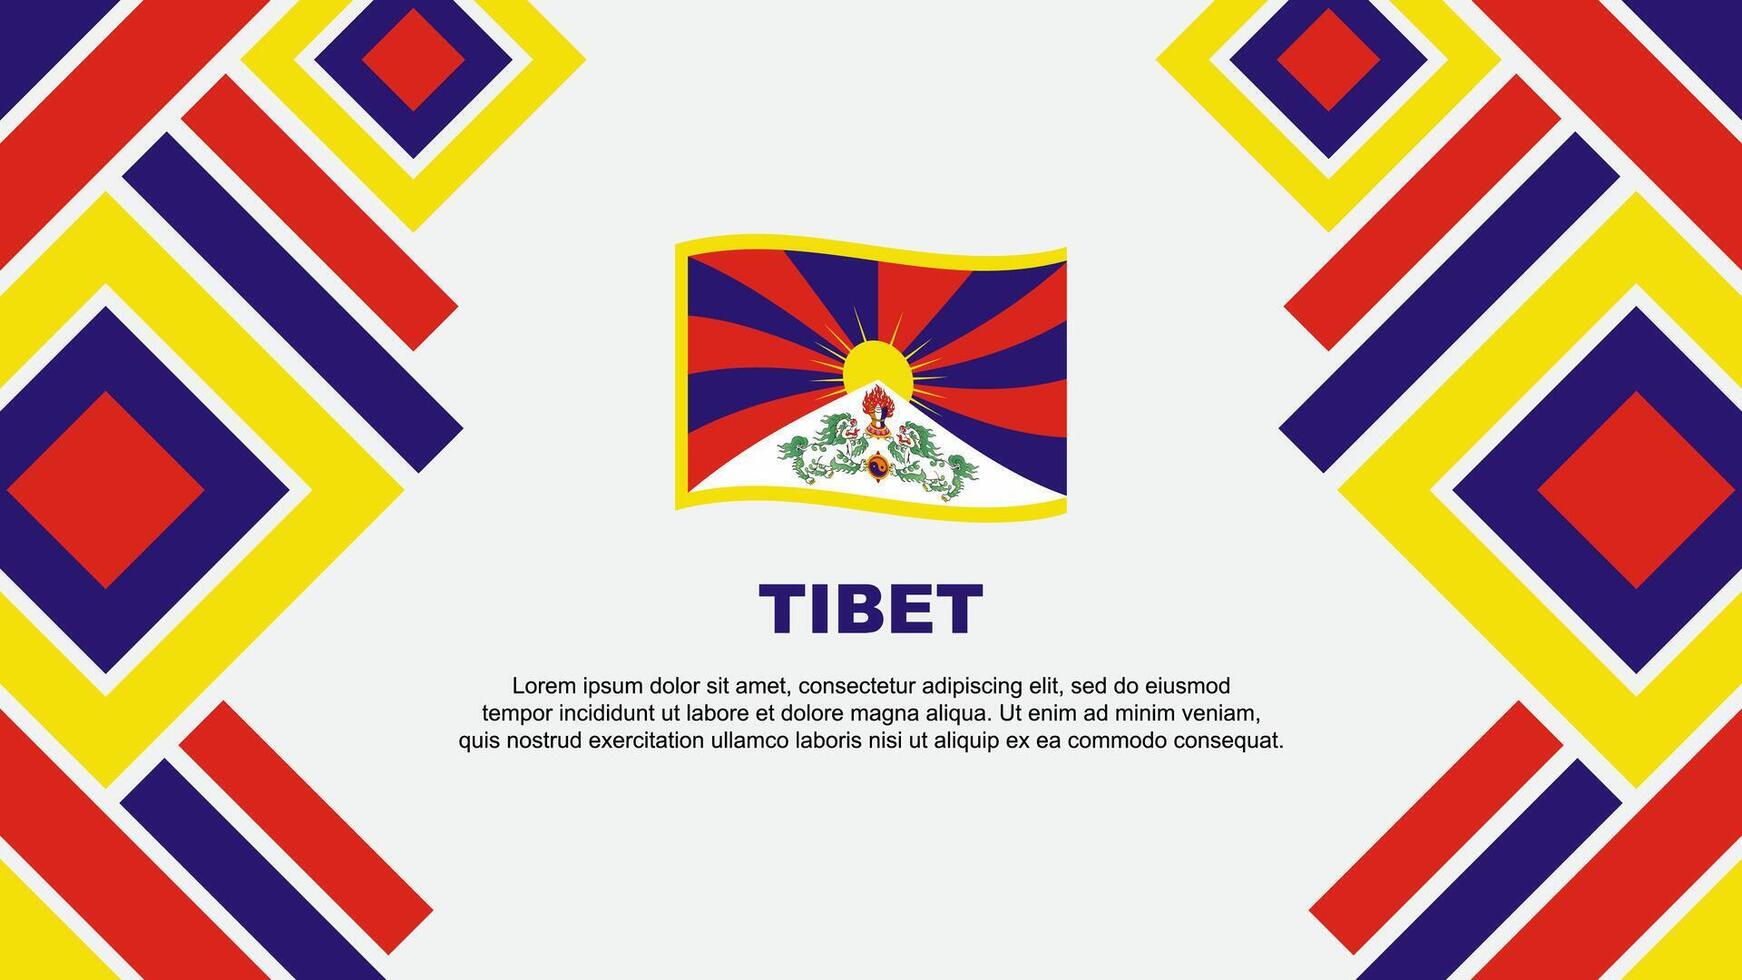 Tibet Flag Abstract Background Design Template. Tibet Independence Day Banner Wallpaper Vector Illustration. Tibet